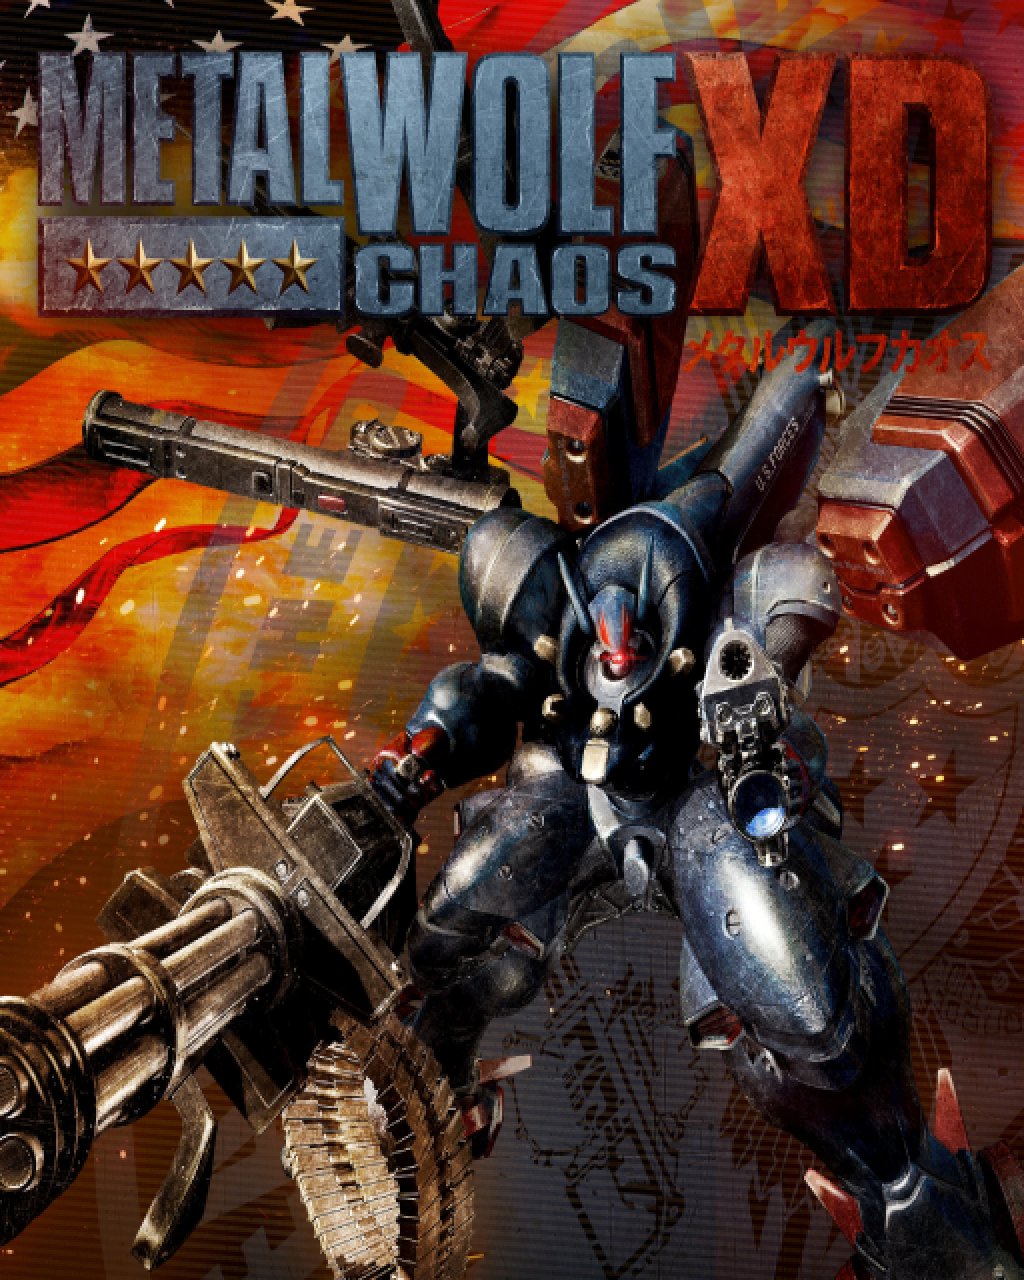 Metal Wolf Chaos XD